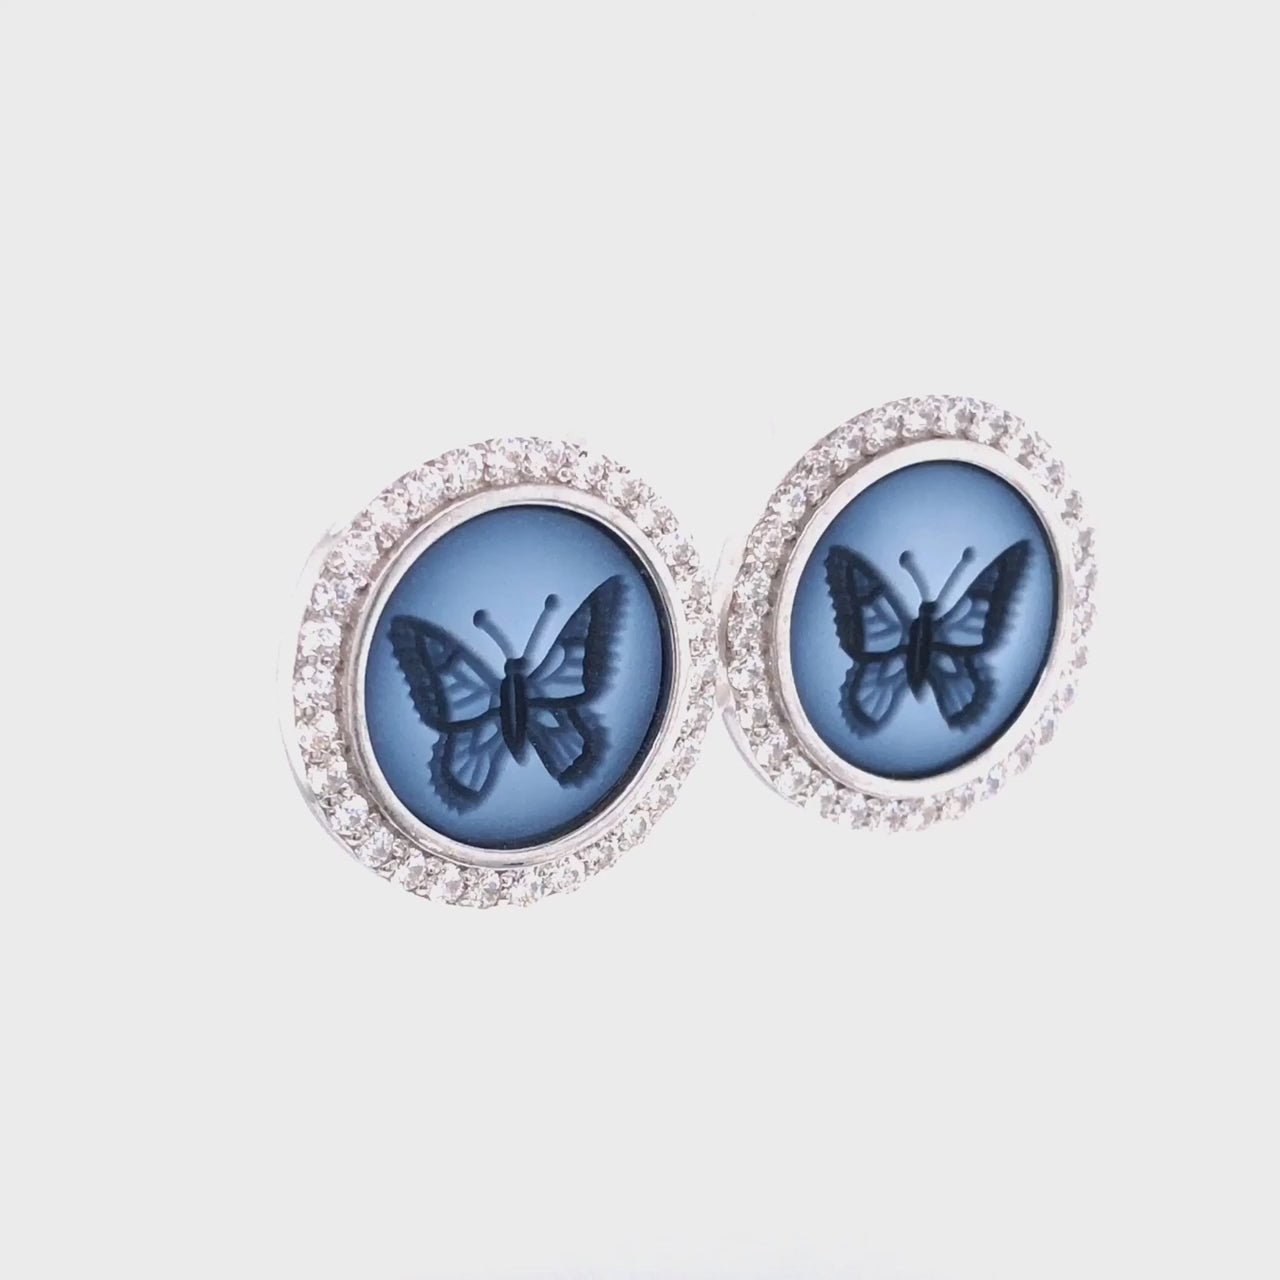 Butterfly Intaglio earrings with diamonds